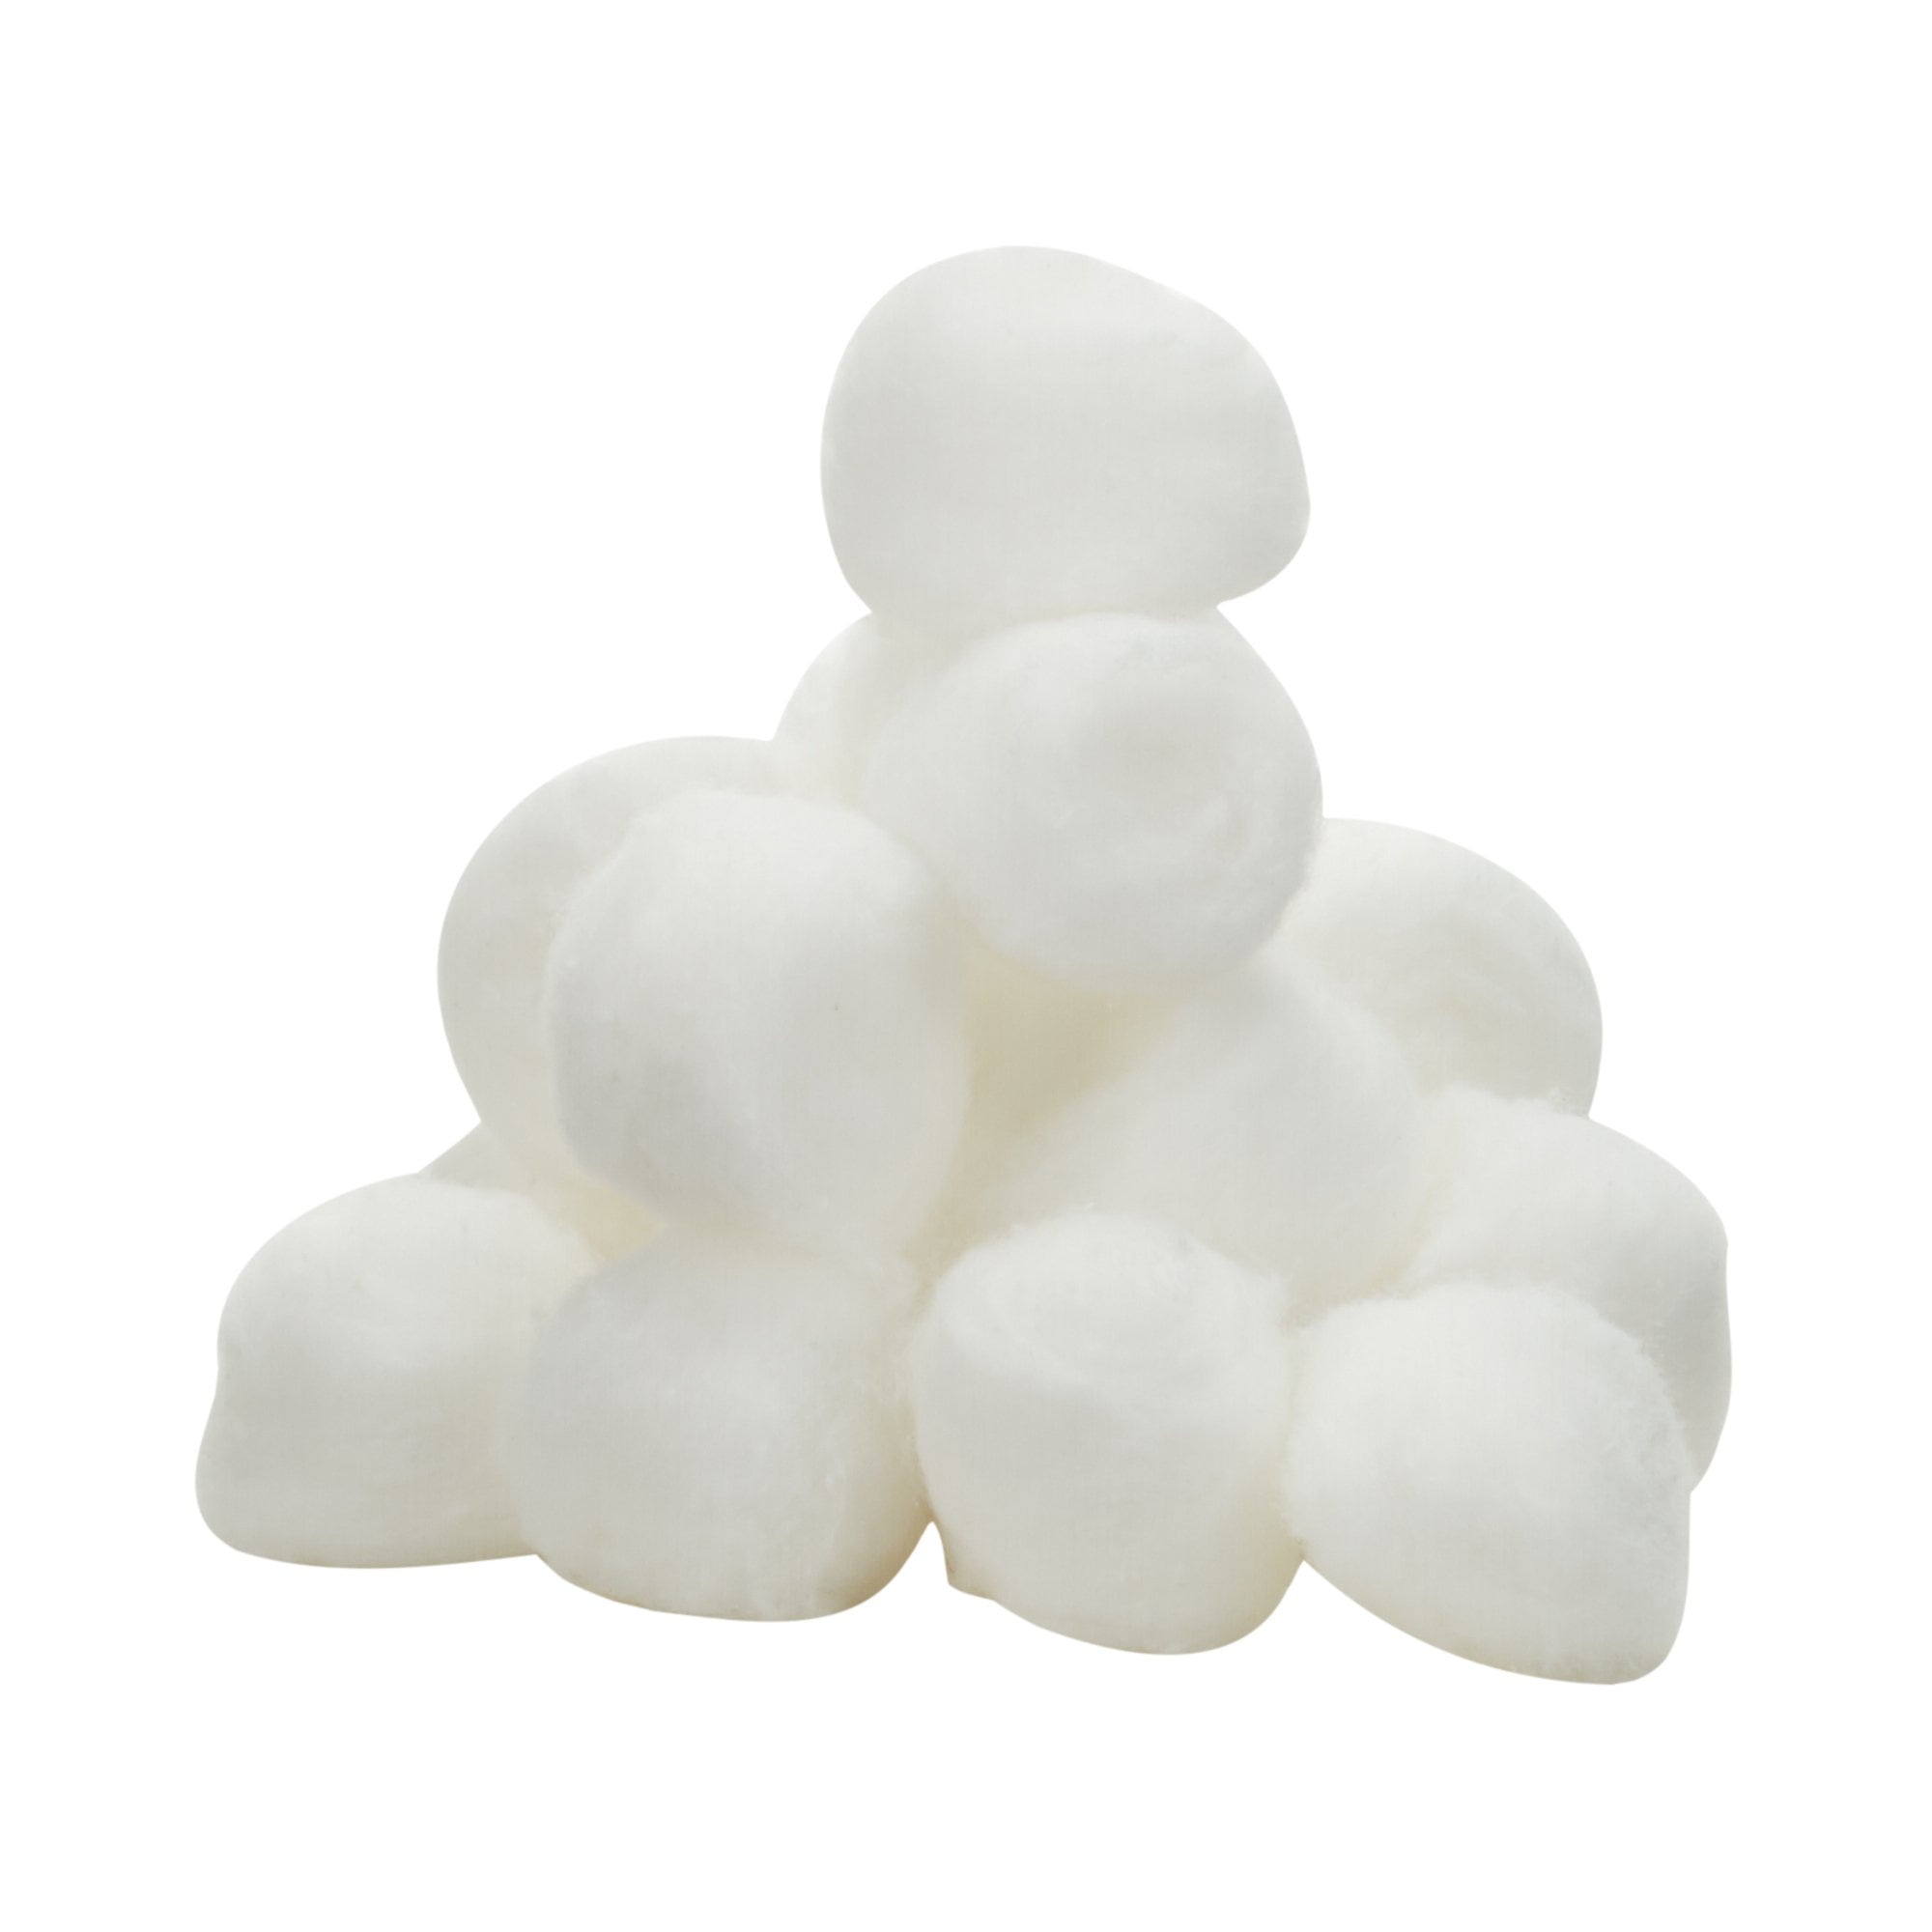 Cotton Balls<br> Medium, 10,000/Case <br> PIVETAL 21294627